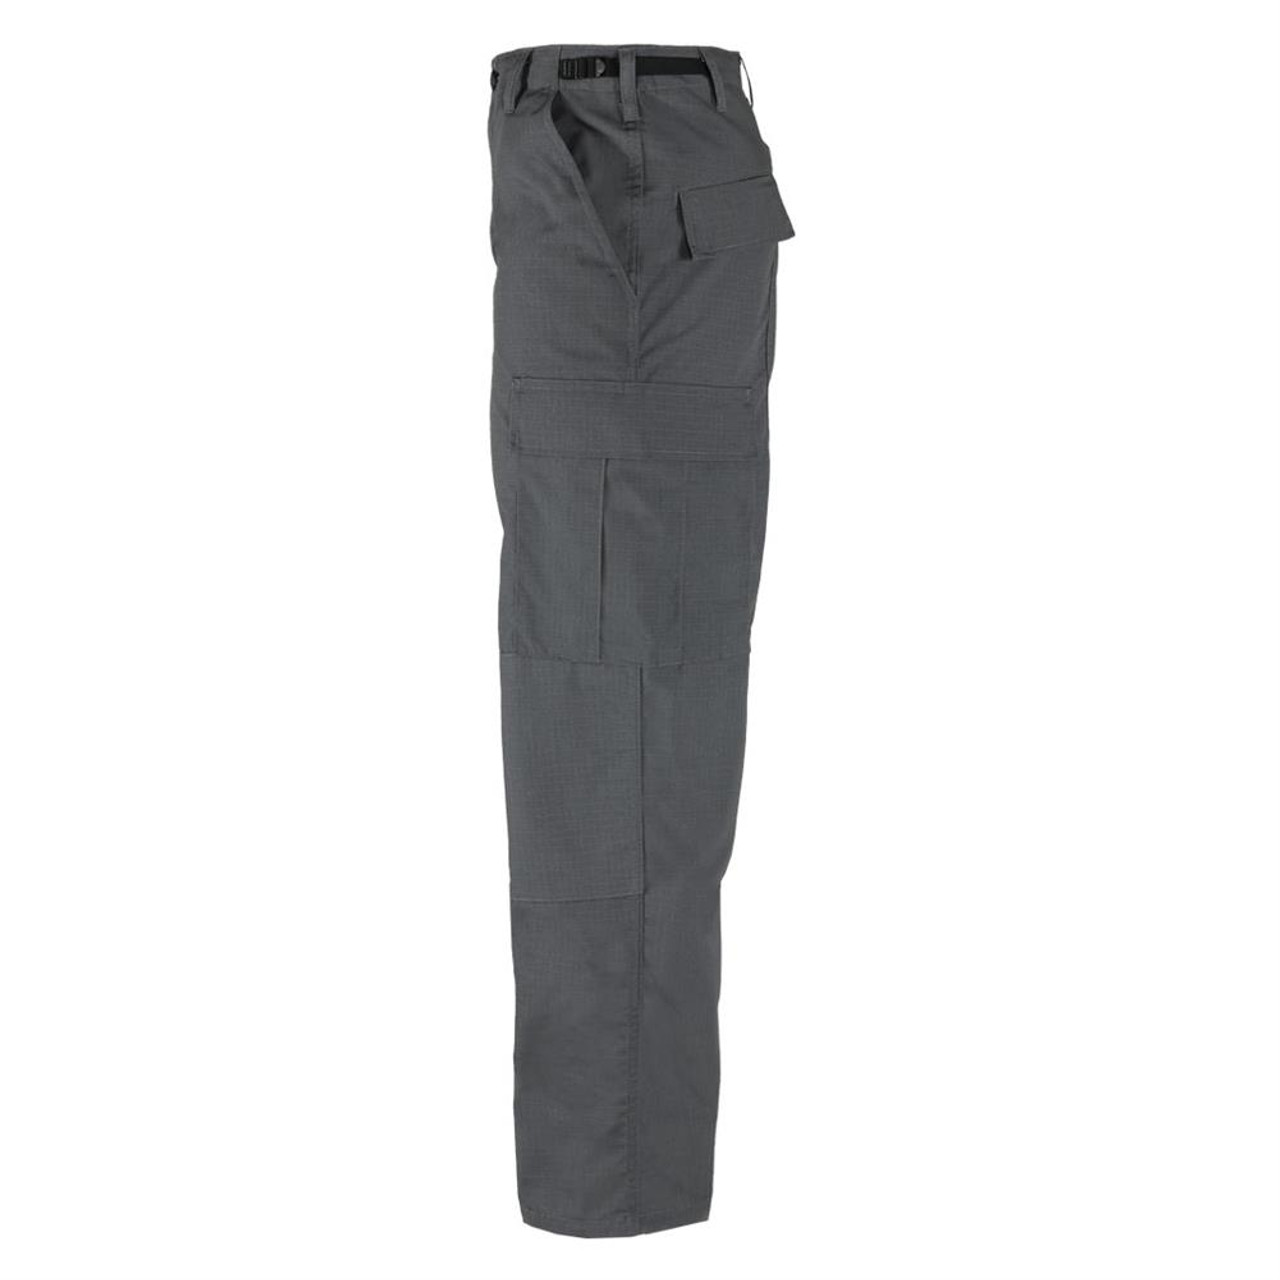 Tru-Spec Men's 24-7 Series OD Green Range Cotton/Poly Twill Pants